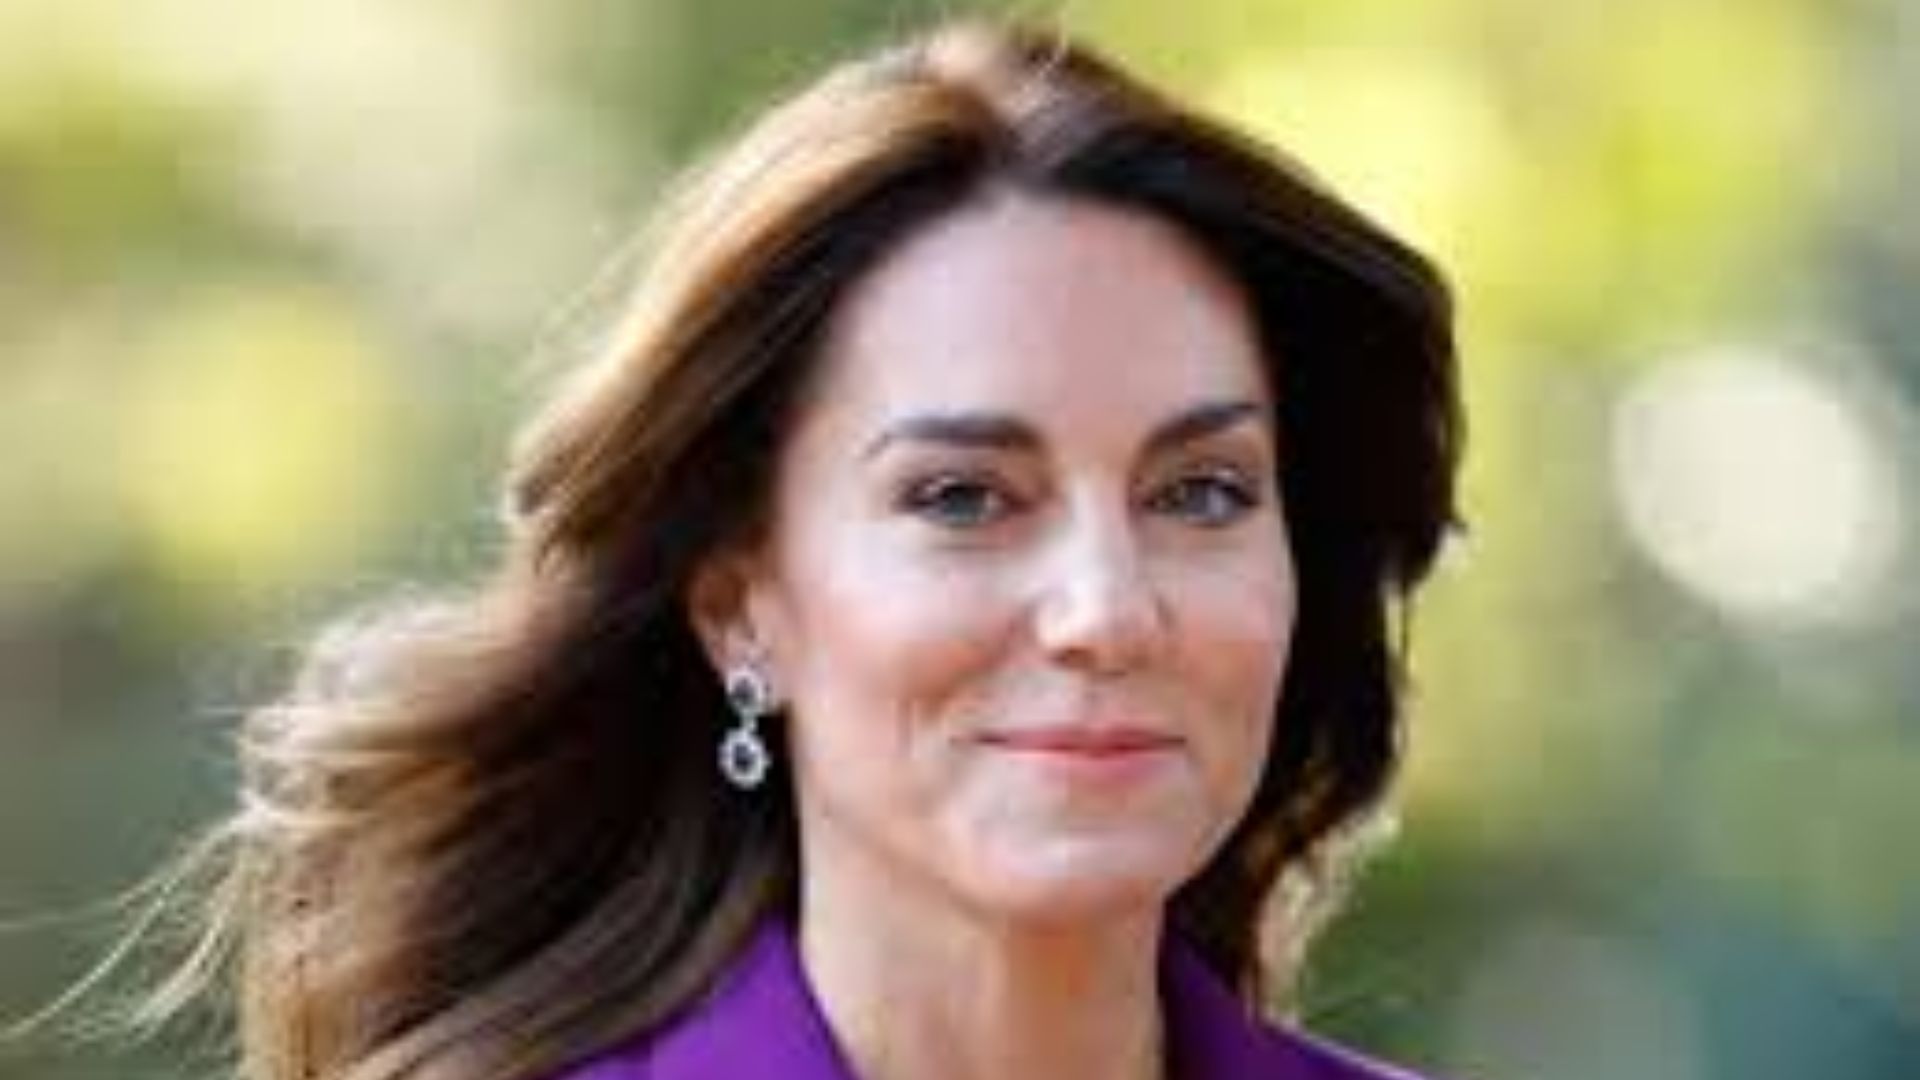 Prince Harry, Meghan Markle show concern for Kate Middleton’s cancer diagnosis